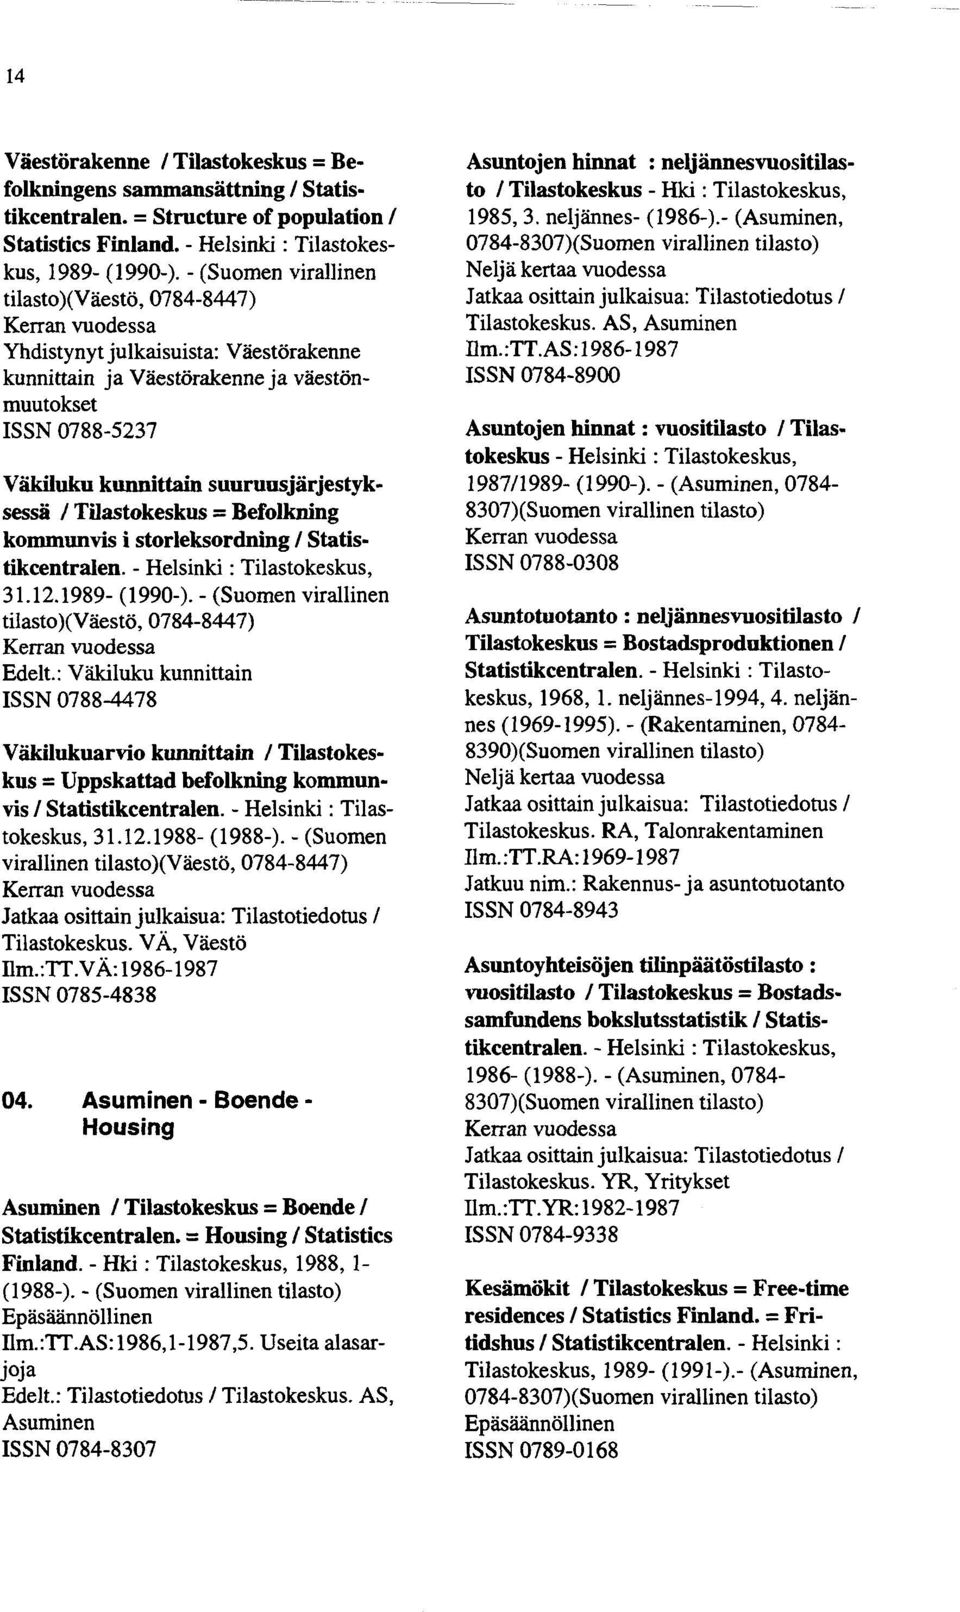 Tilastokeskus = Befolkning kommunvis i storleksordning / Statistikcentralen. - Helsinki : Tilastokeskus, 31.12.1989- (1990-). - (Suomen virallinen tilasto)(väestö, 0784-8447) Edelt.